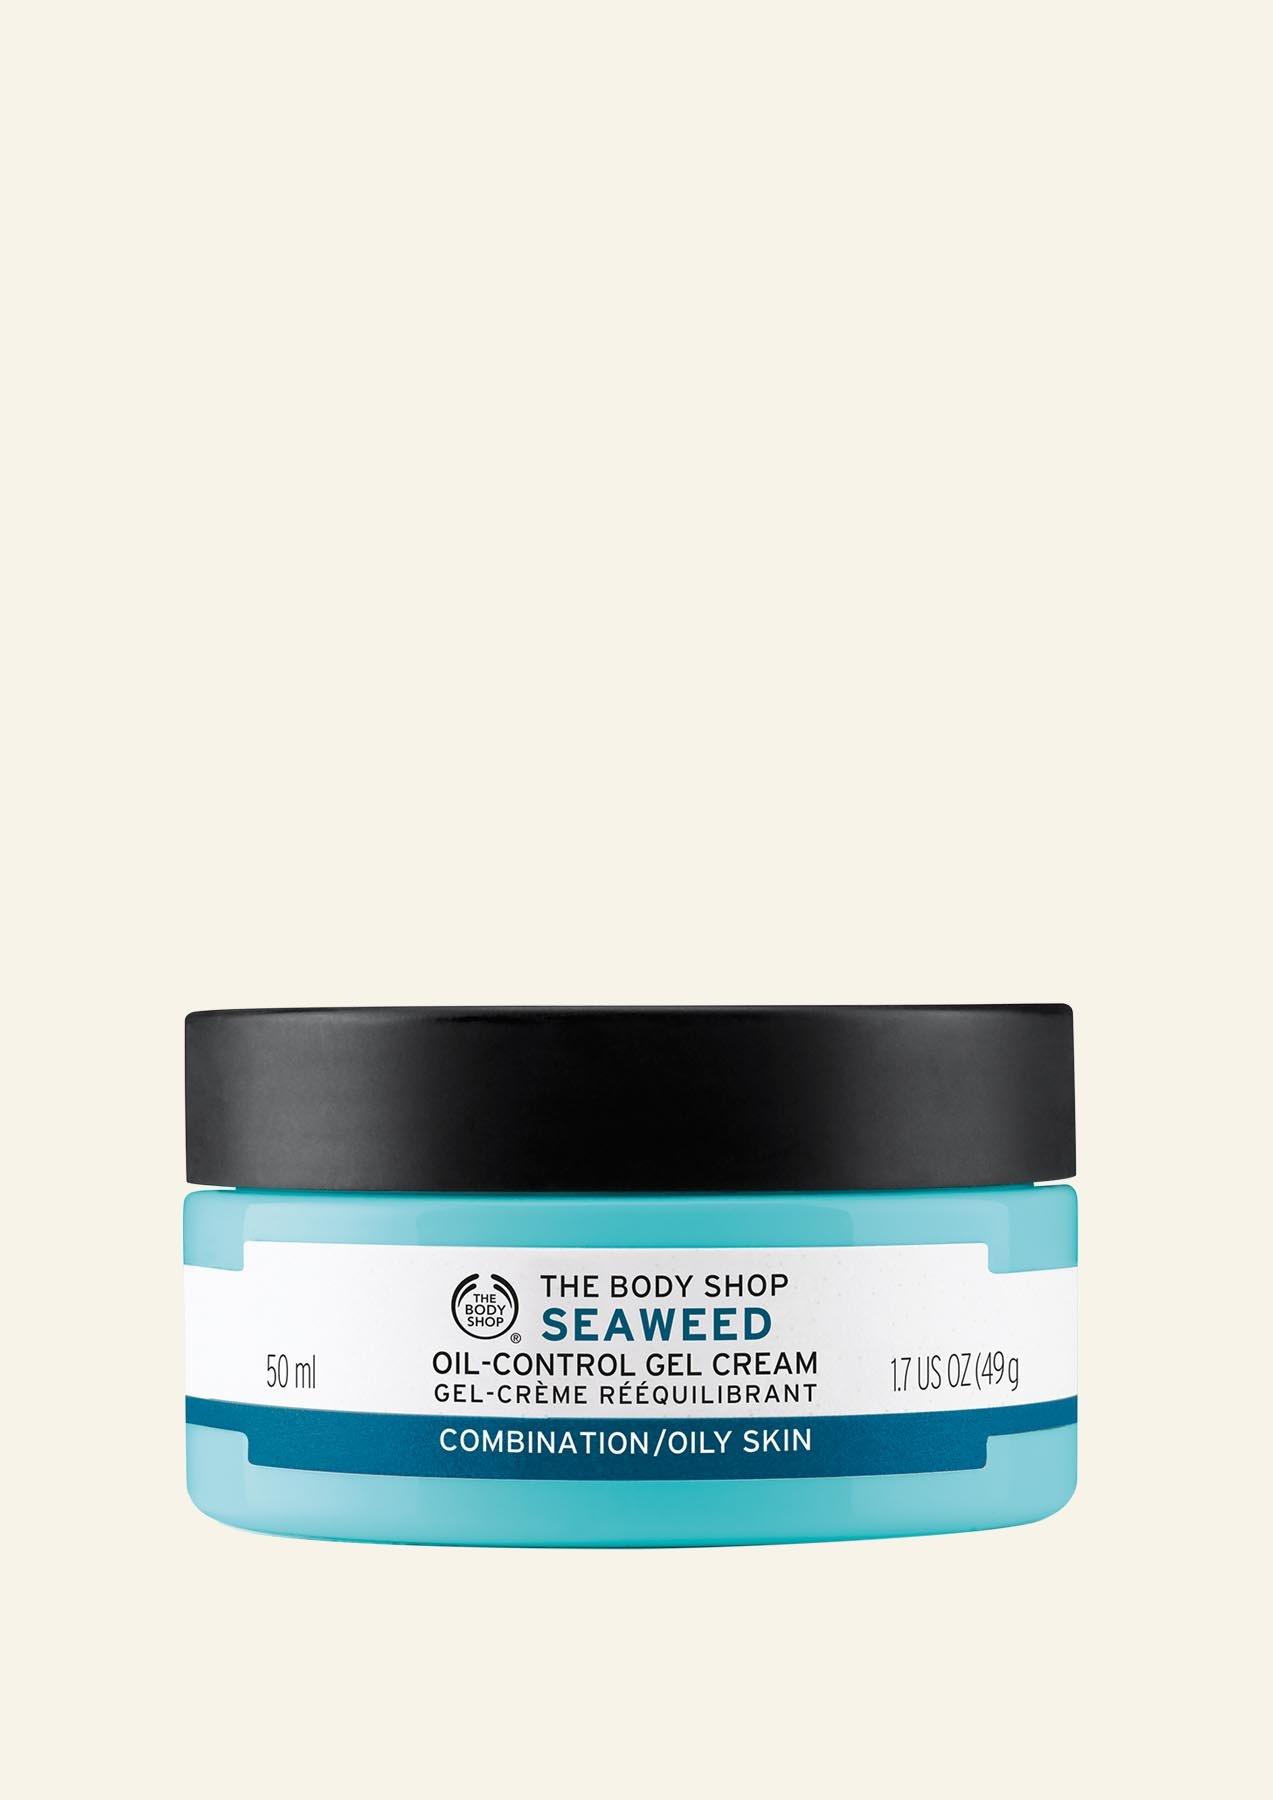 The Body Shop 1094281 Seaweed Oil-Control Gel Cream, Paraben-Free Daily Face Cream, 1.7 Oz.